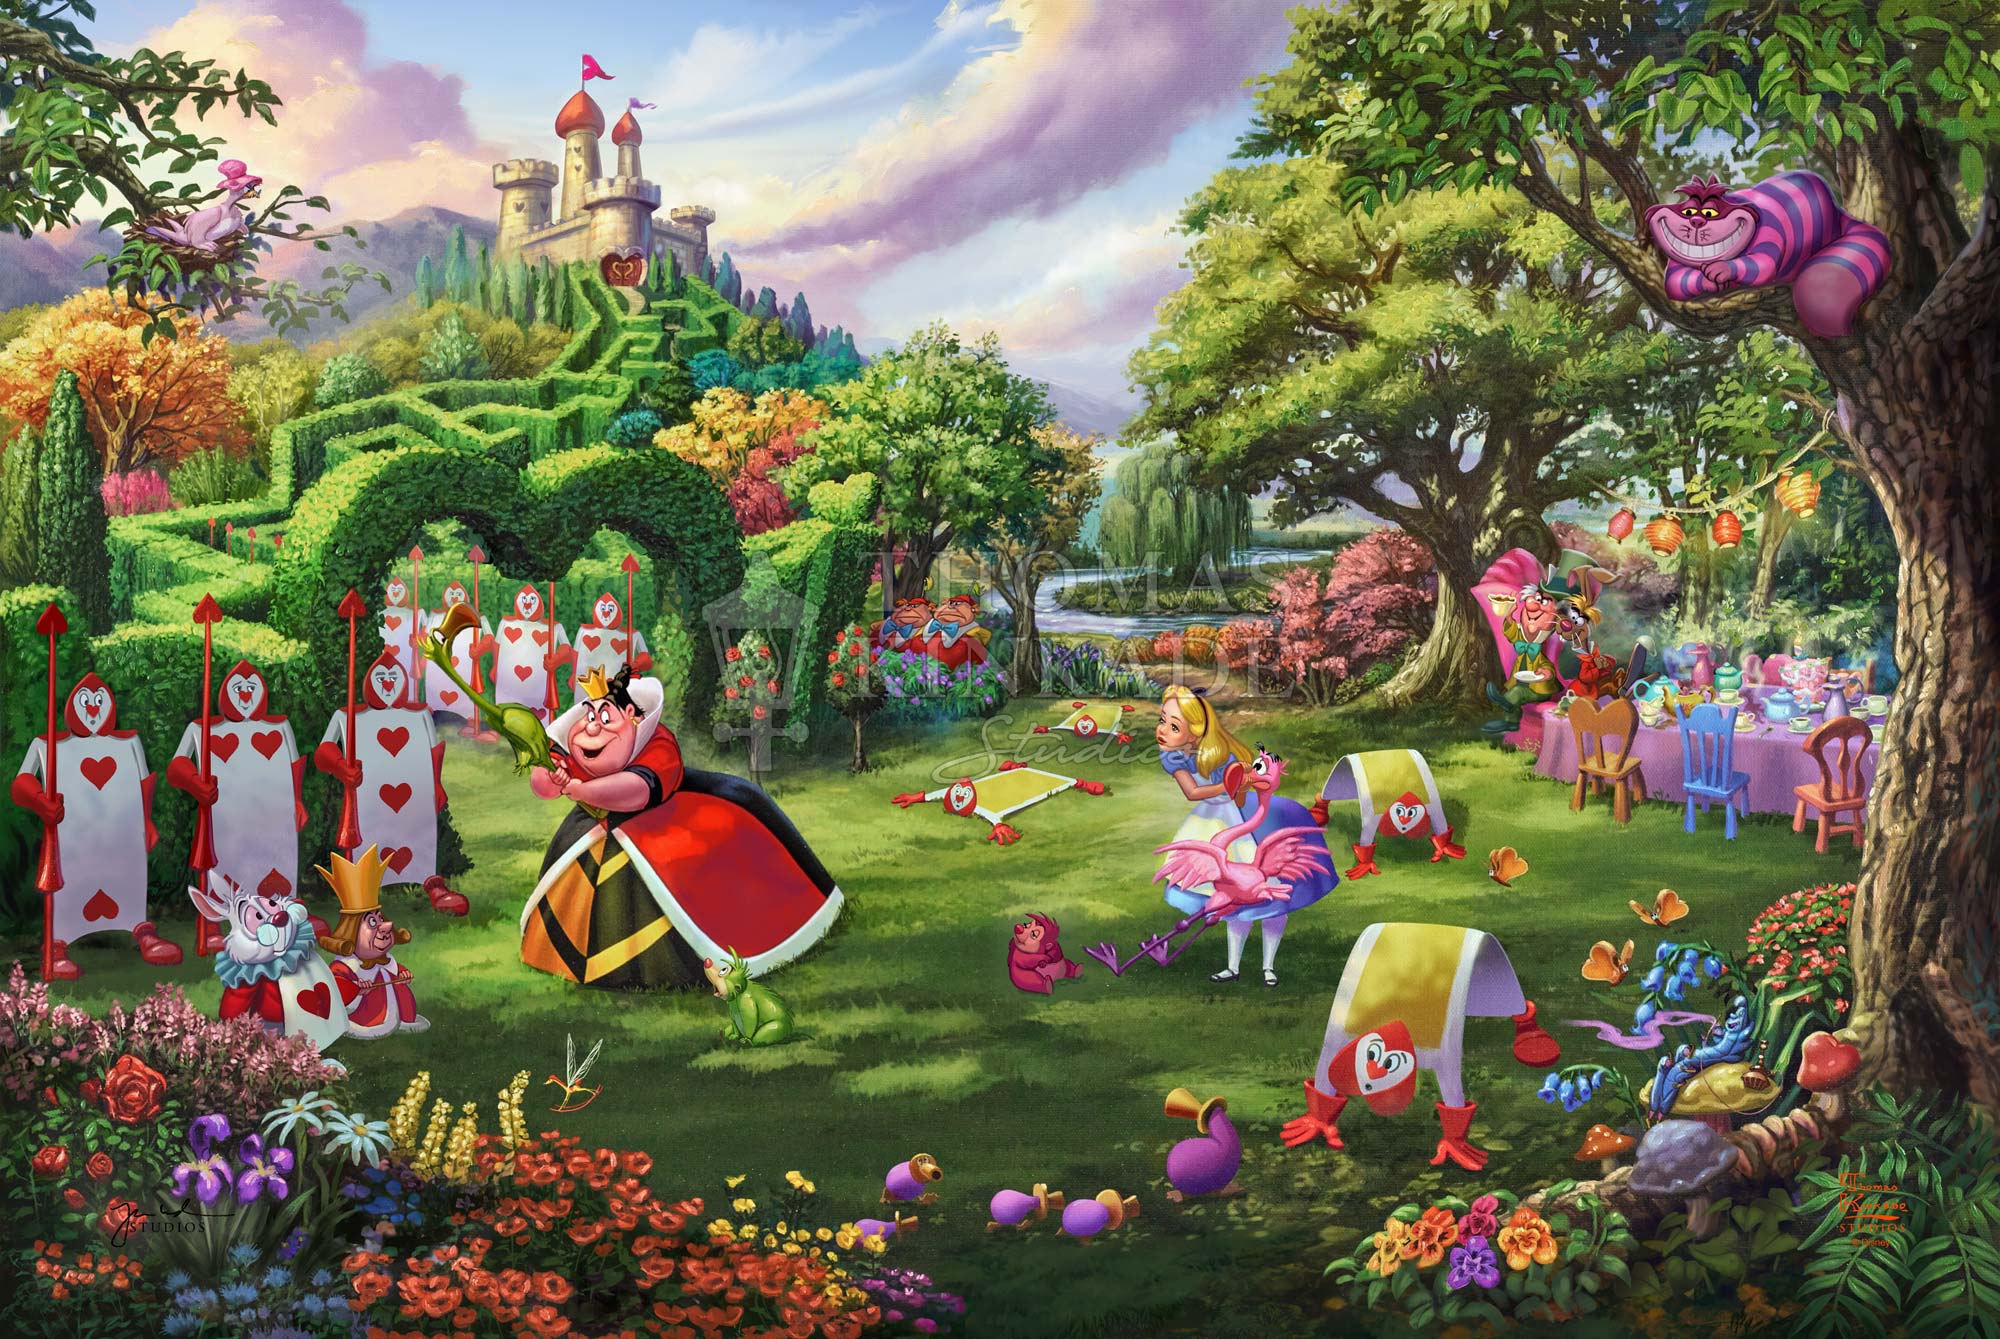 Alice in Wonderland Art   – Disney Art On Main Street